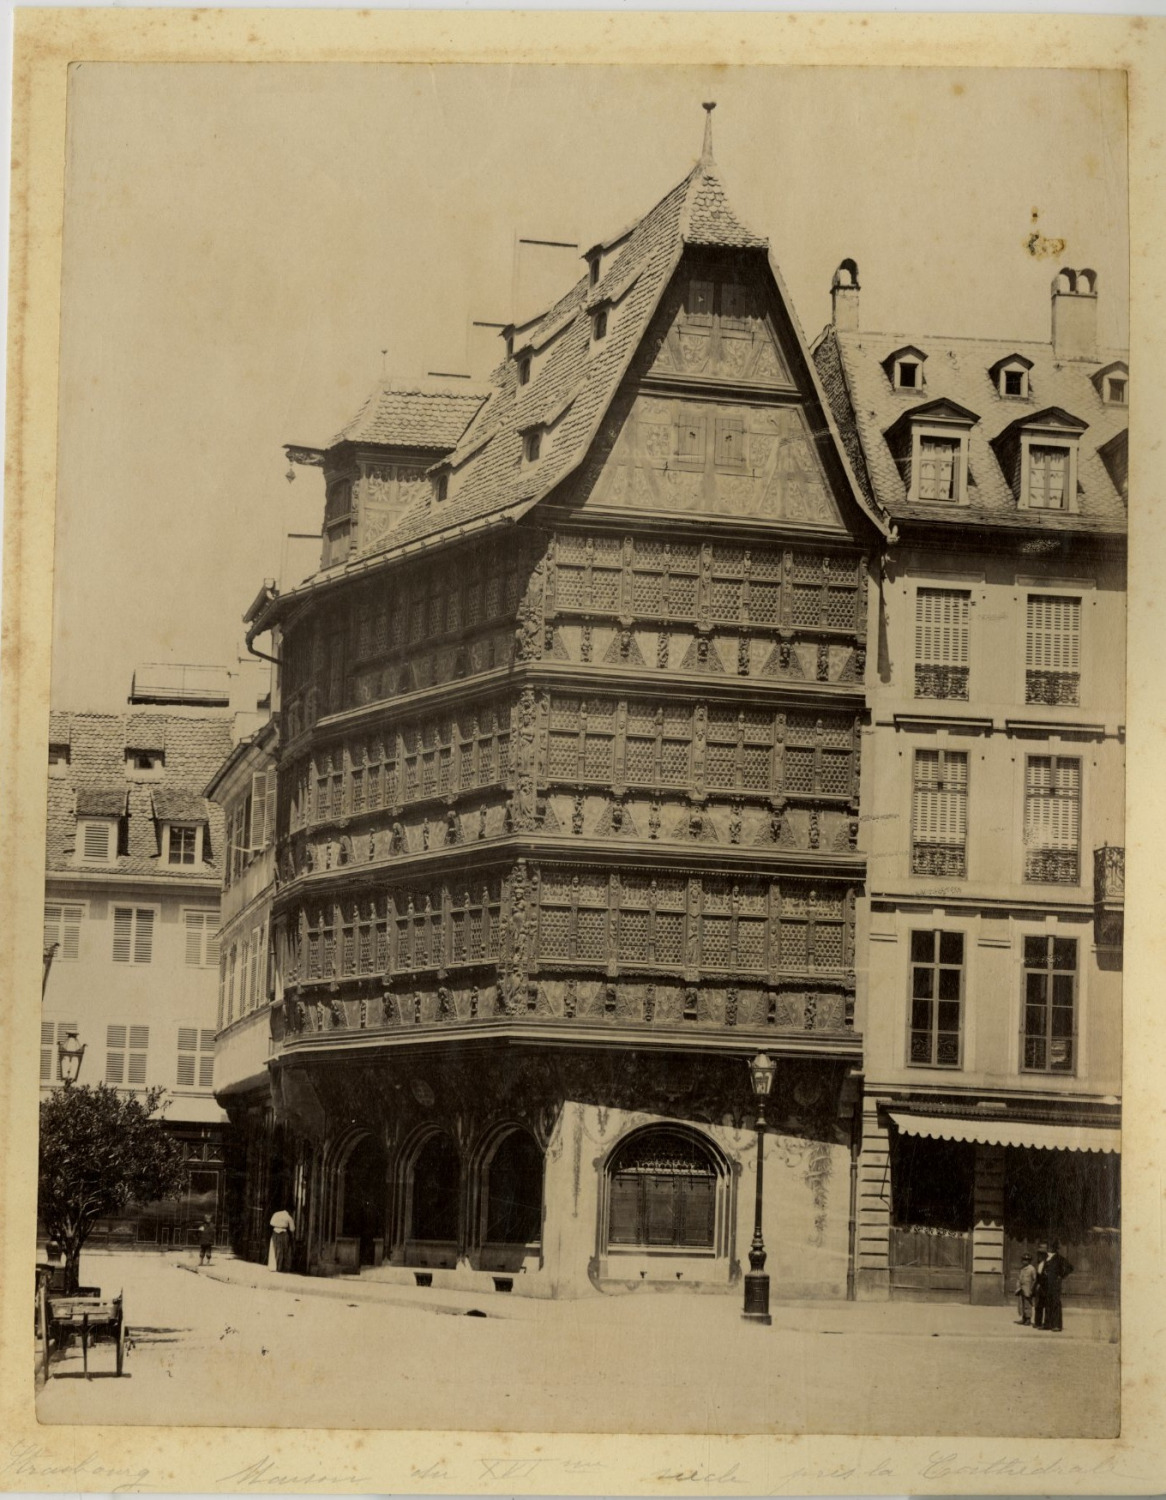 Strasbourg, Maison Kammerzell, 1875 Vintage Albumen Print Albumin Print 2